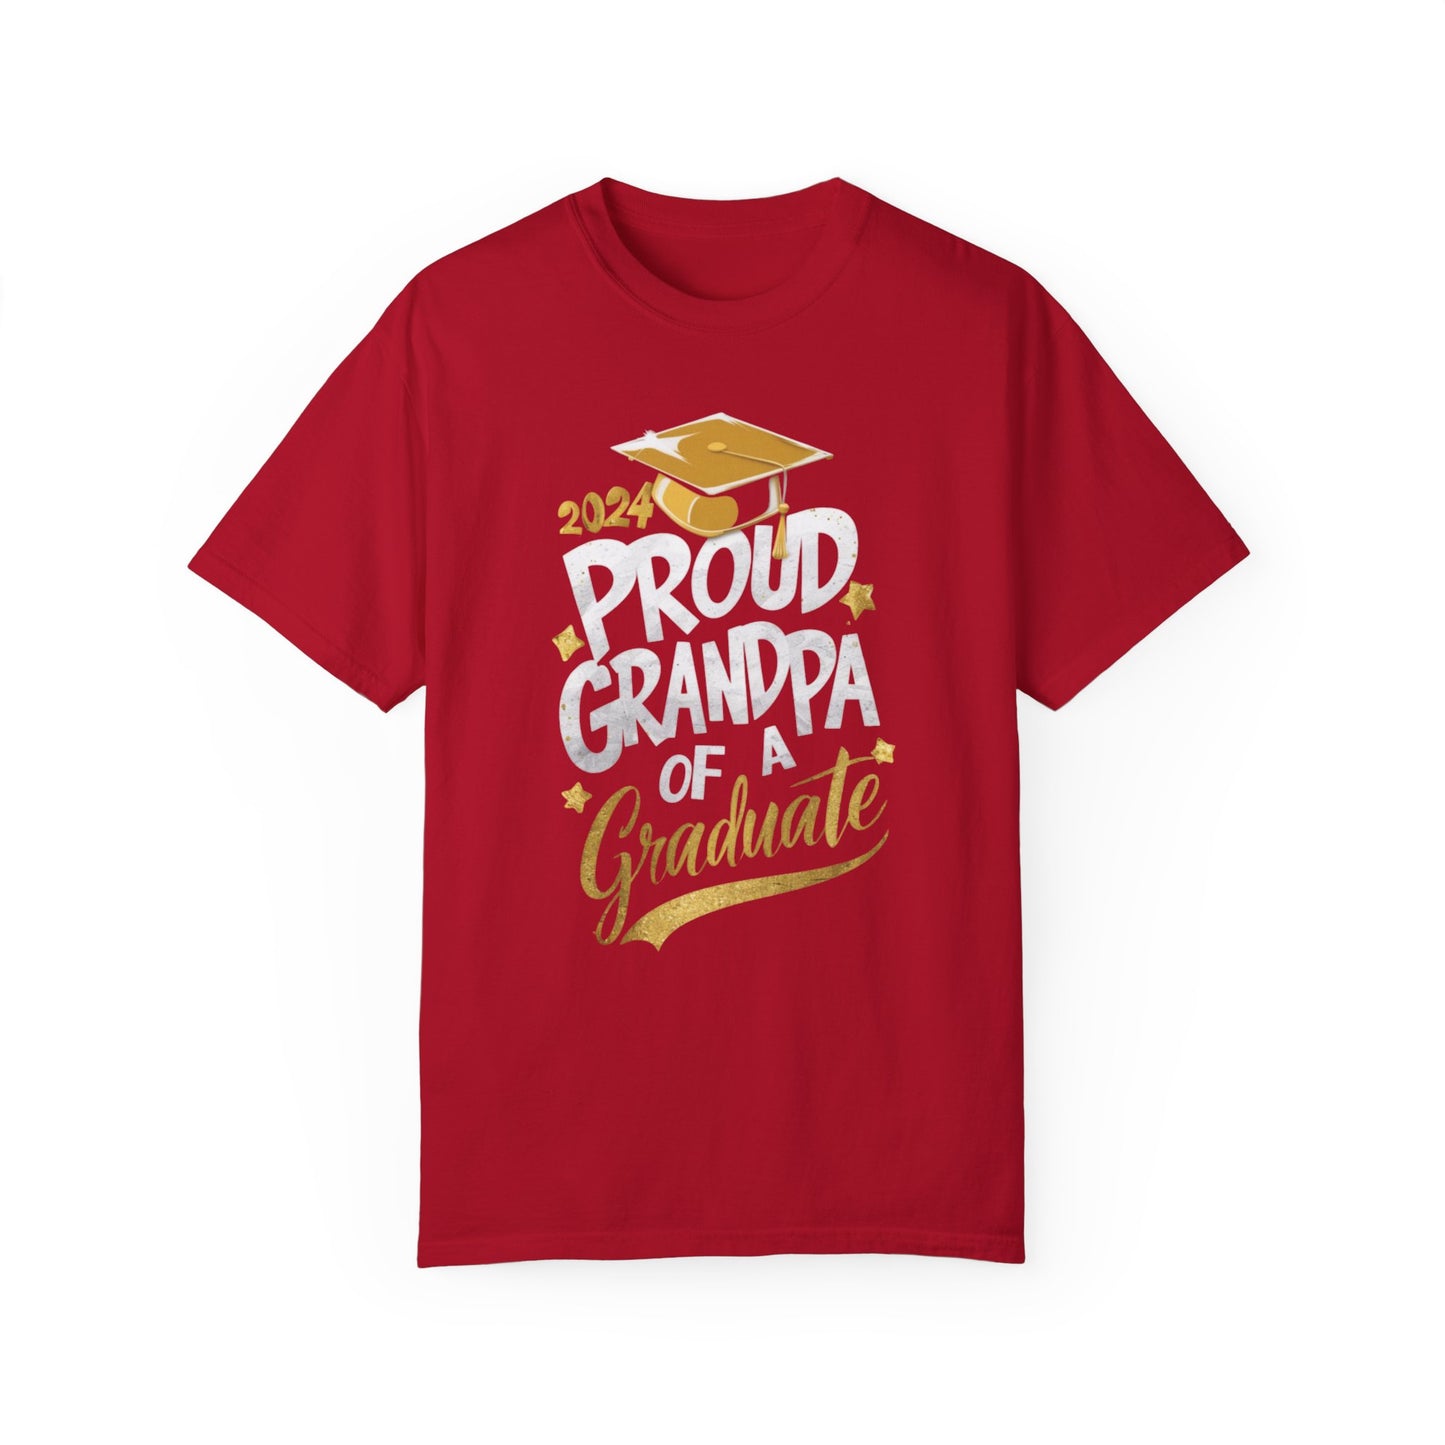 Proud Grandpa of a 2024 Graduate Unisex Garment-dyed T-shirt Cotton Funny Humorous Graphic Soft Premium Unisex Men Women Red T-shirt Birthday Gift-2